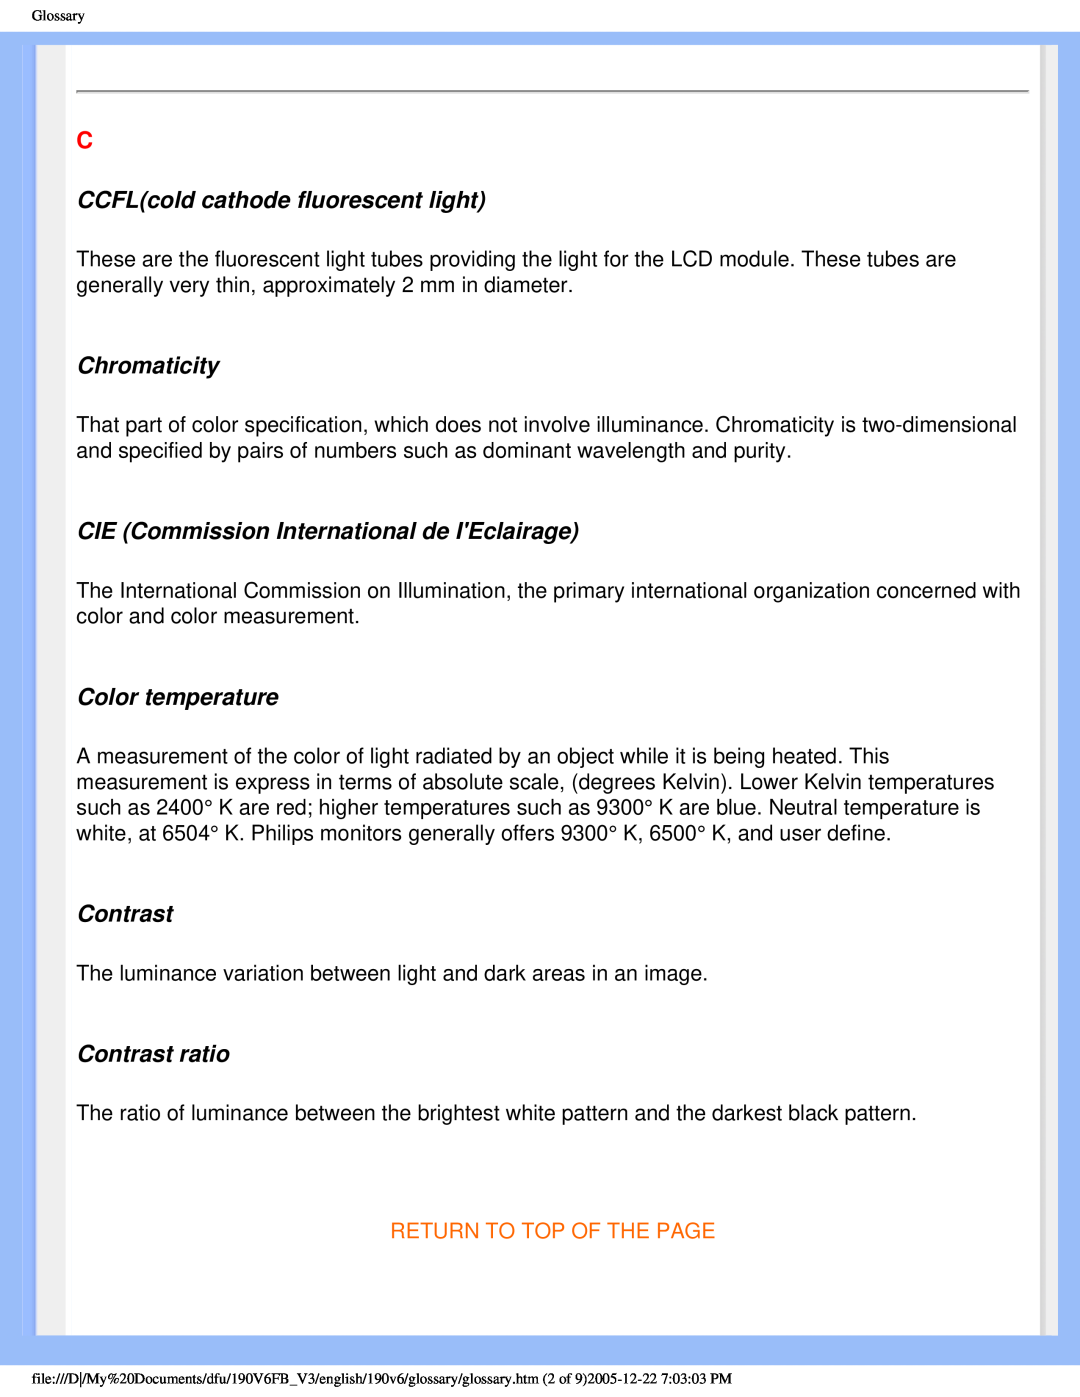 Philips 190V6FB CCFLcold cathode fluorescent light, Chromaticity, CIE Commission International de IEclairage, Contrast 